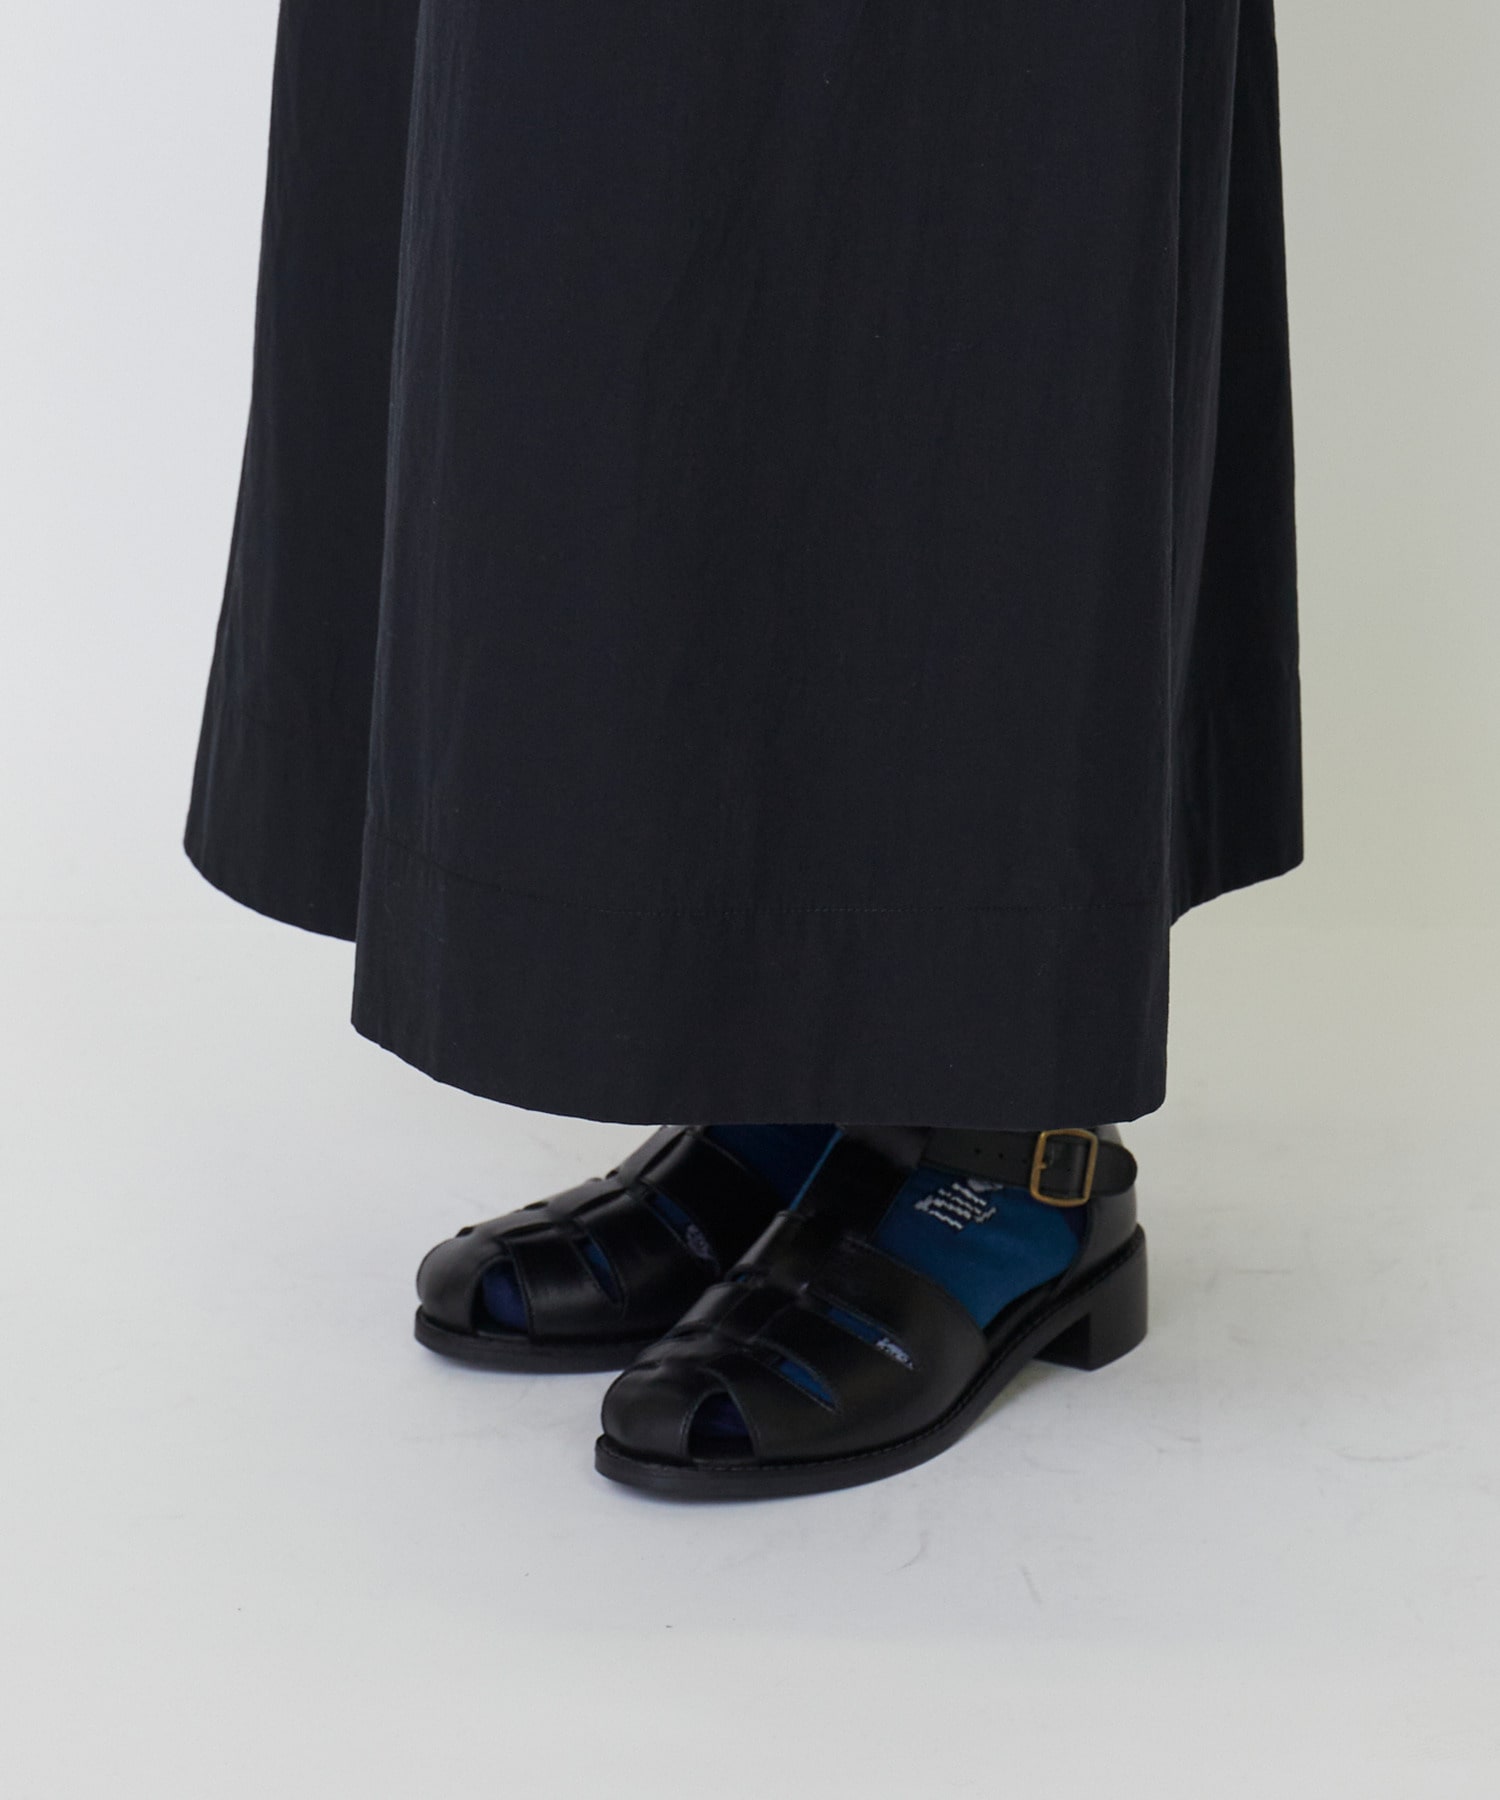 【LOISIR】コットンリネンタイプライタージャンパースカート 詳細画像 ブラック 18